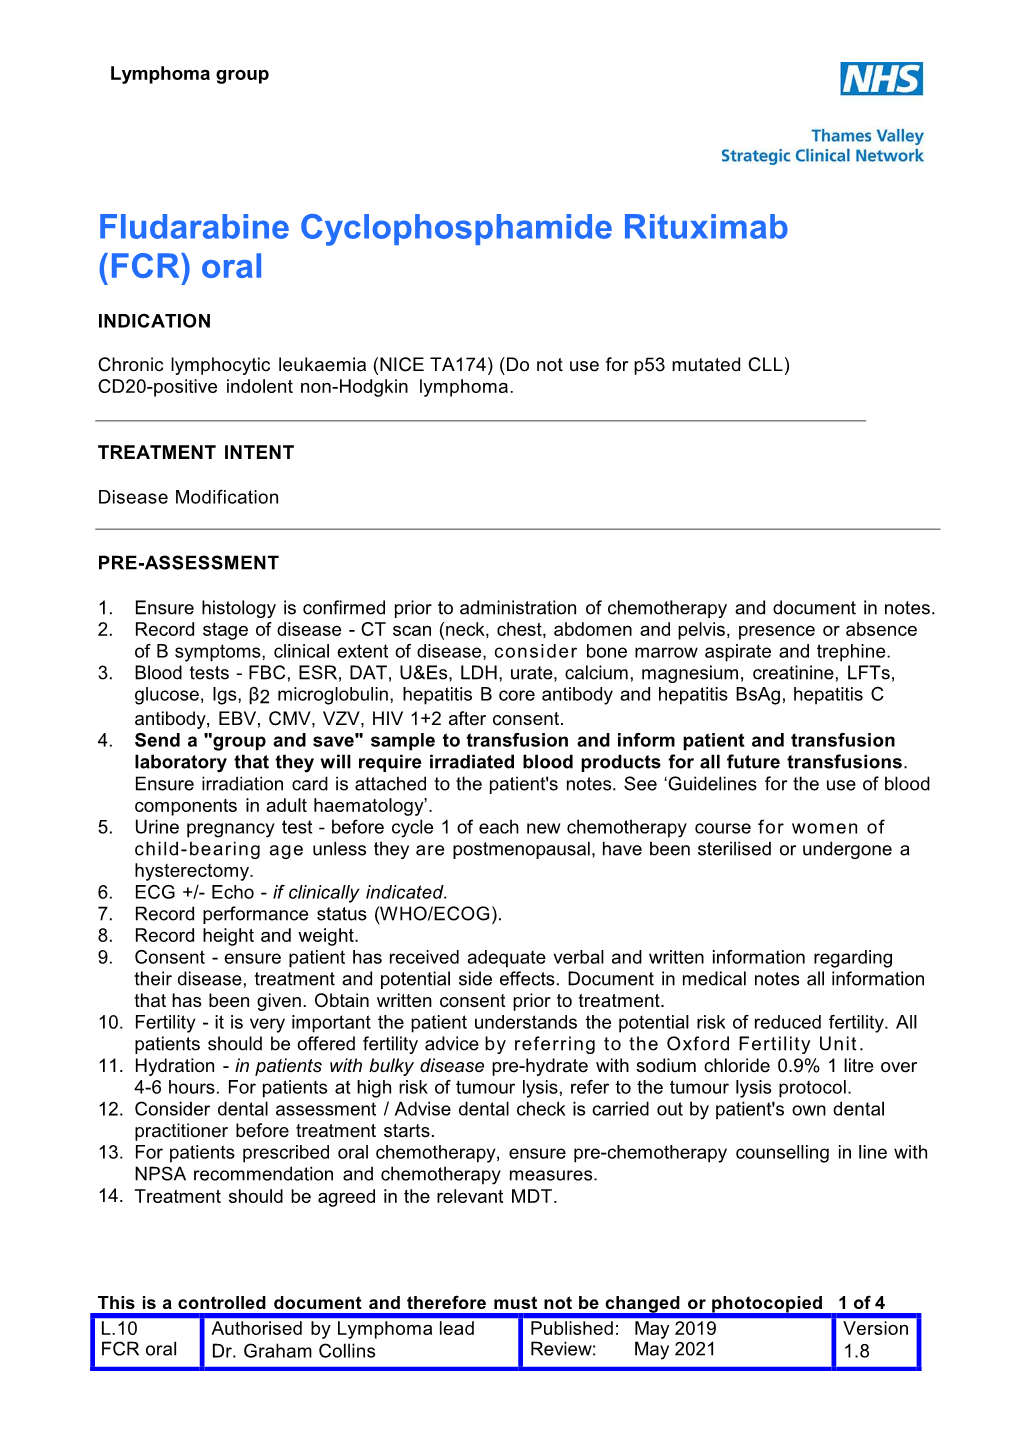 Fludarabine Cyclophosphamide Rituximab (FCR) Oral